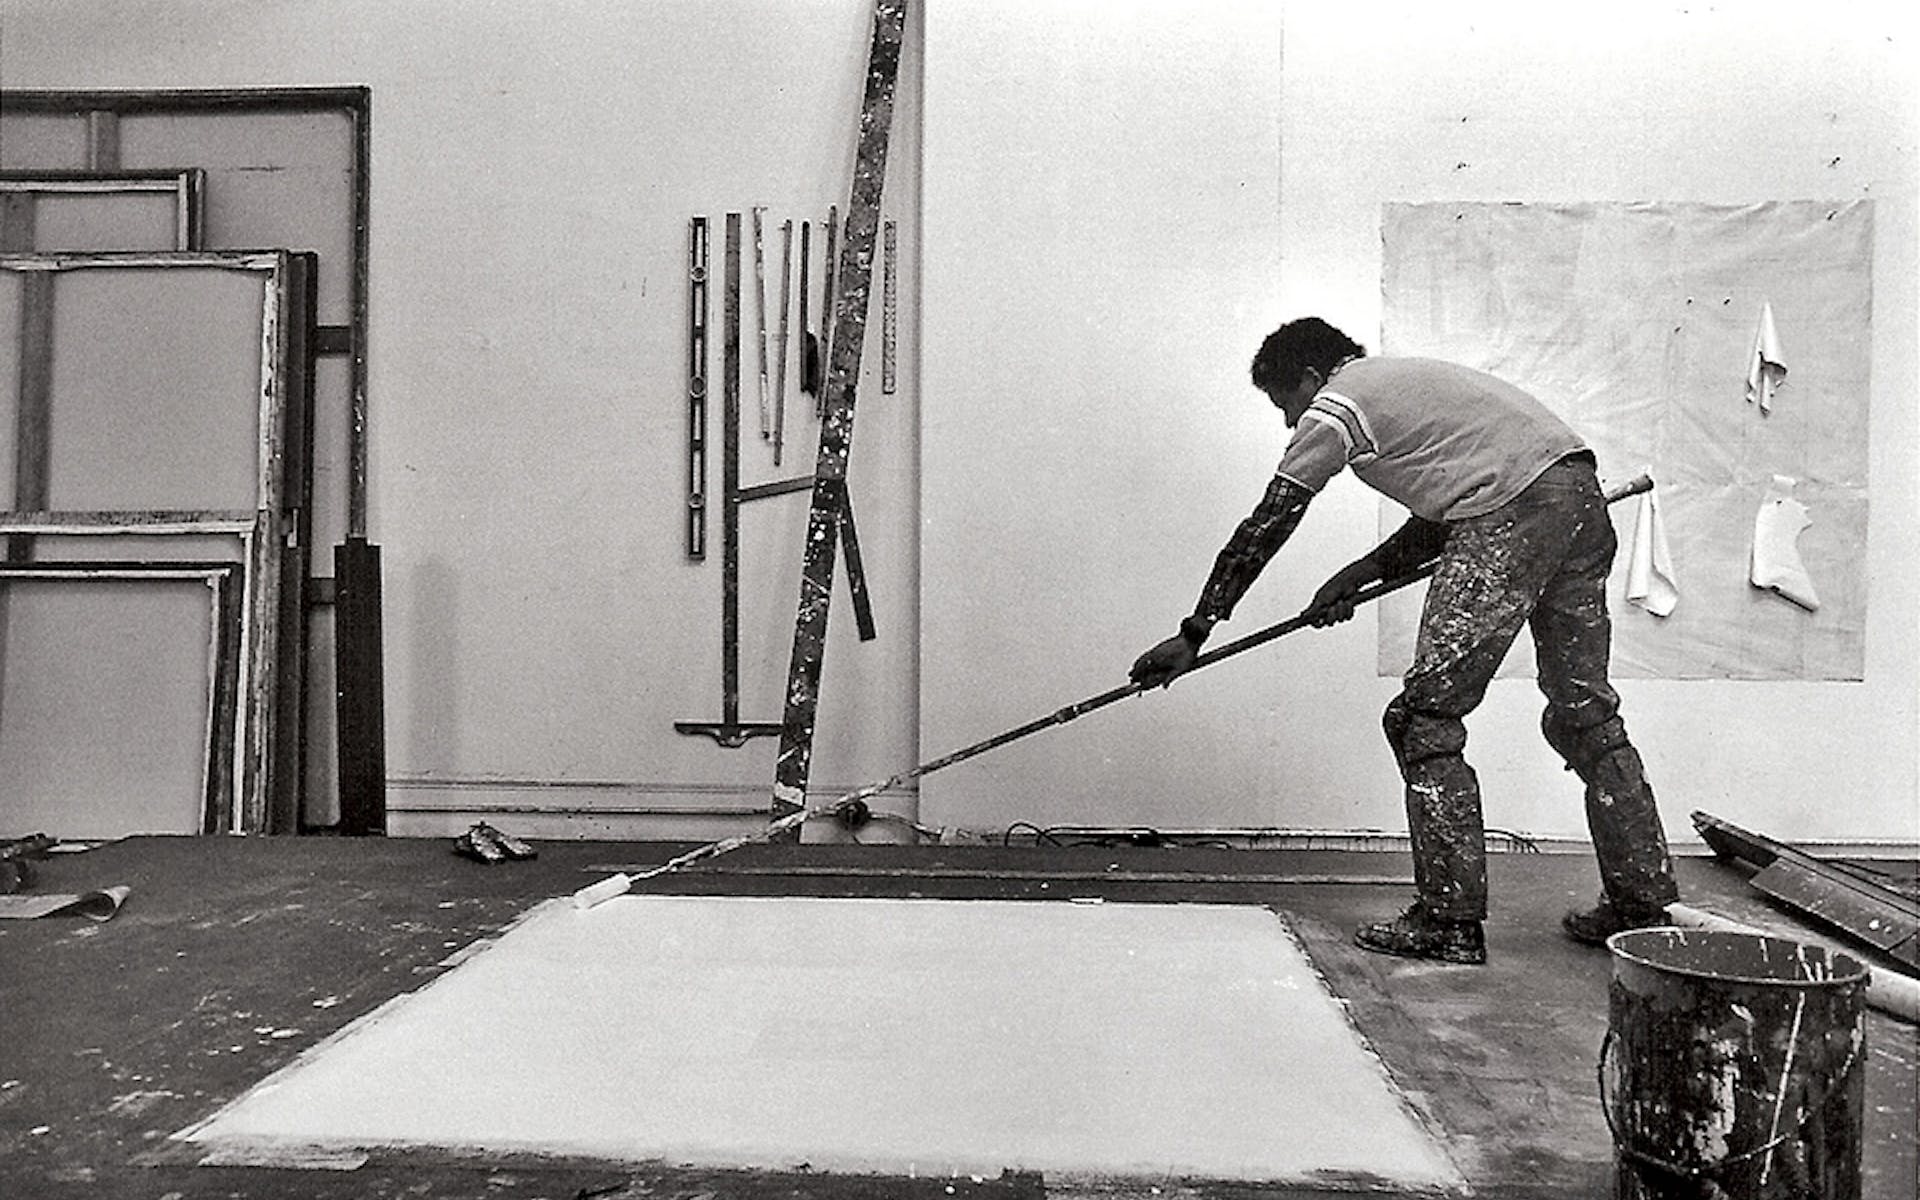 Jack Whitten in his 40 Crosby Street studio New York circa 1974-1975